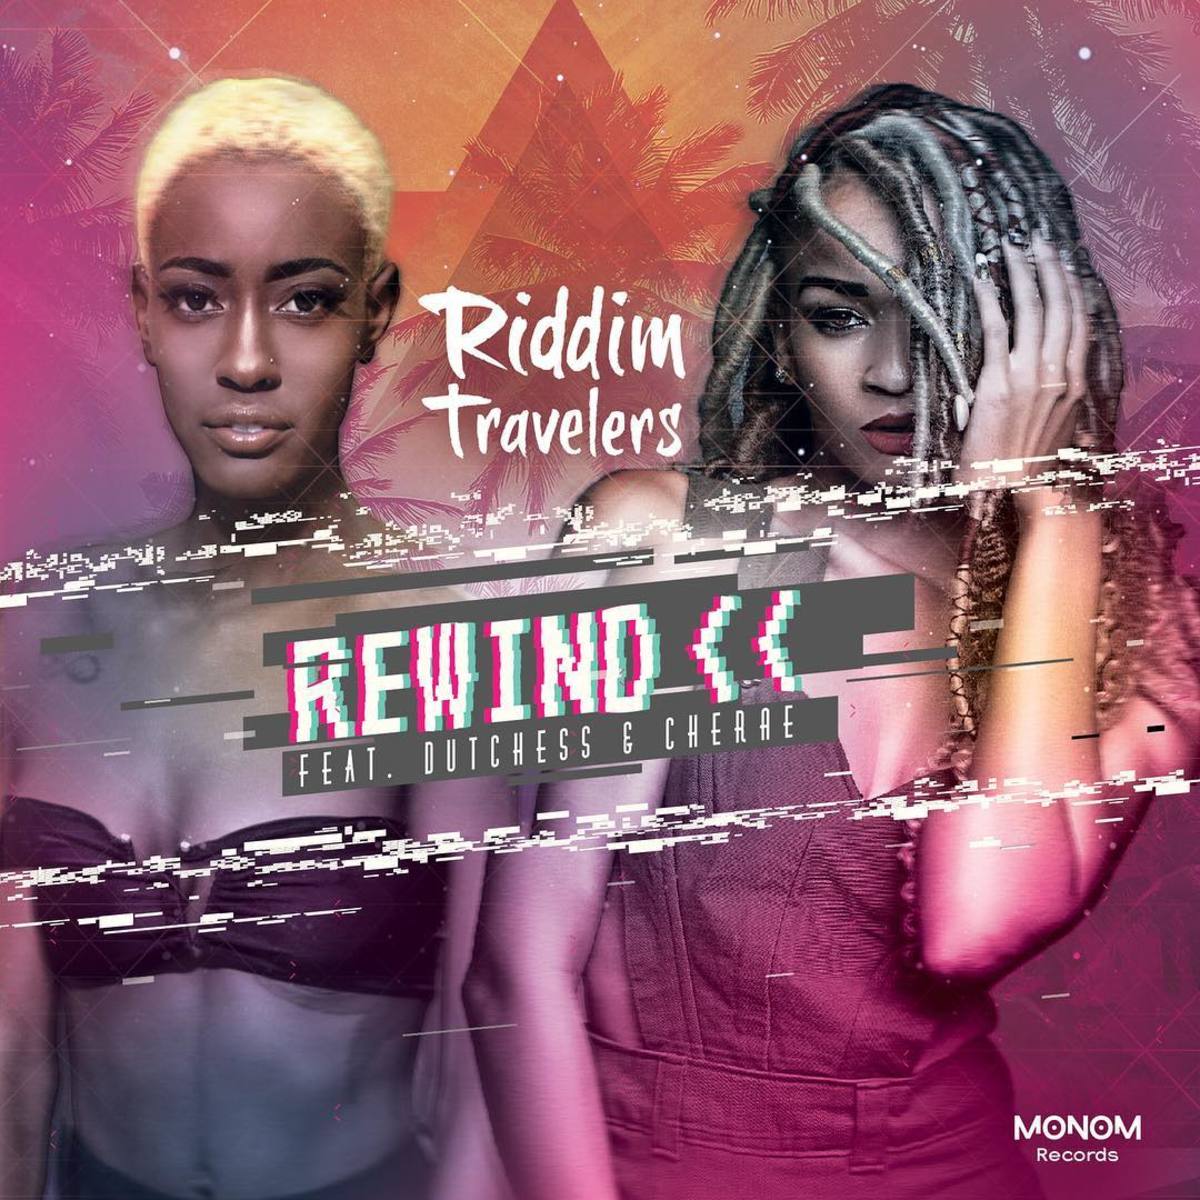 Riddim Travelers - Rewind featuring Dutchess & Cherae (Monom Records) [Album Artwork]